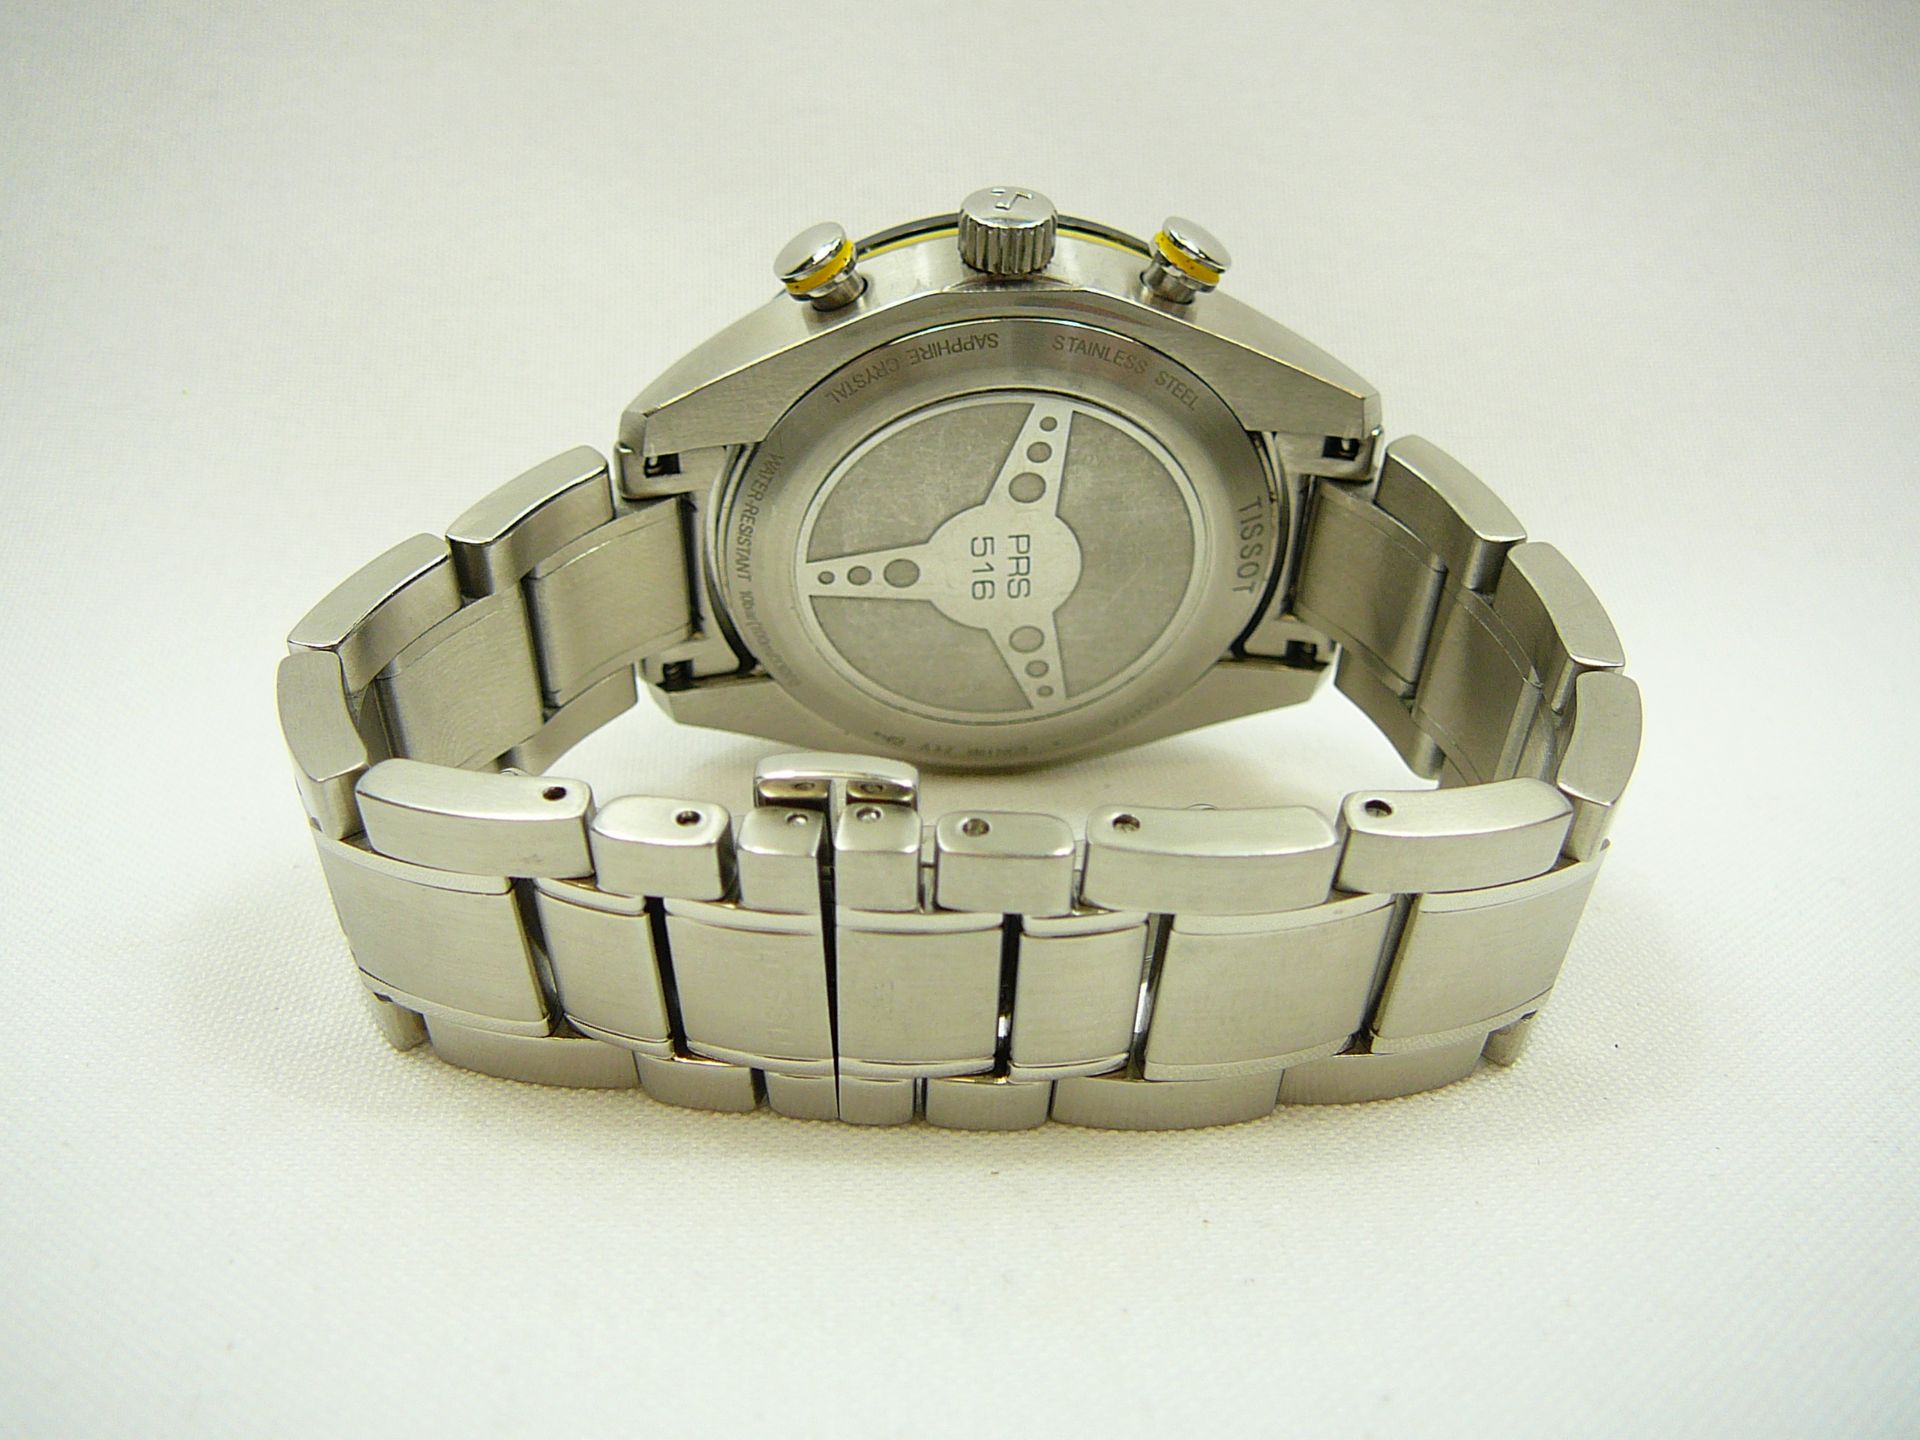 Gents Tissot Wristwatch - Image 3 of 3